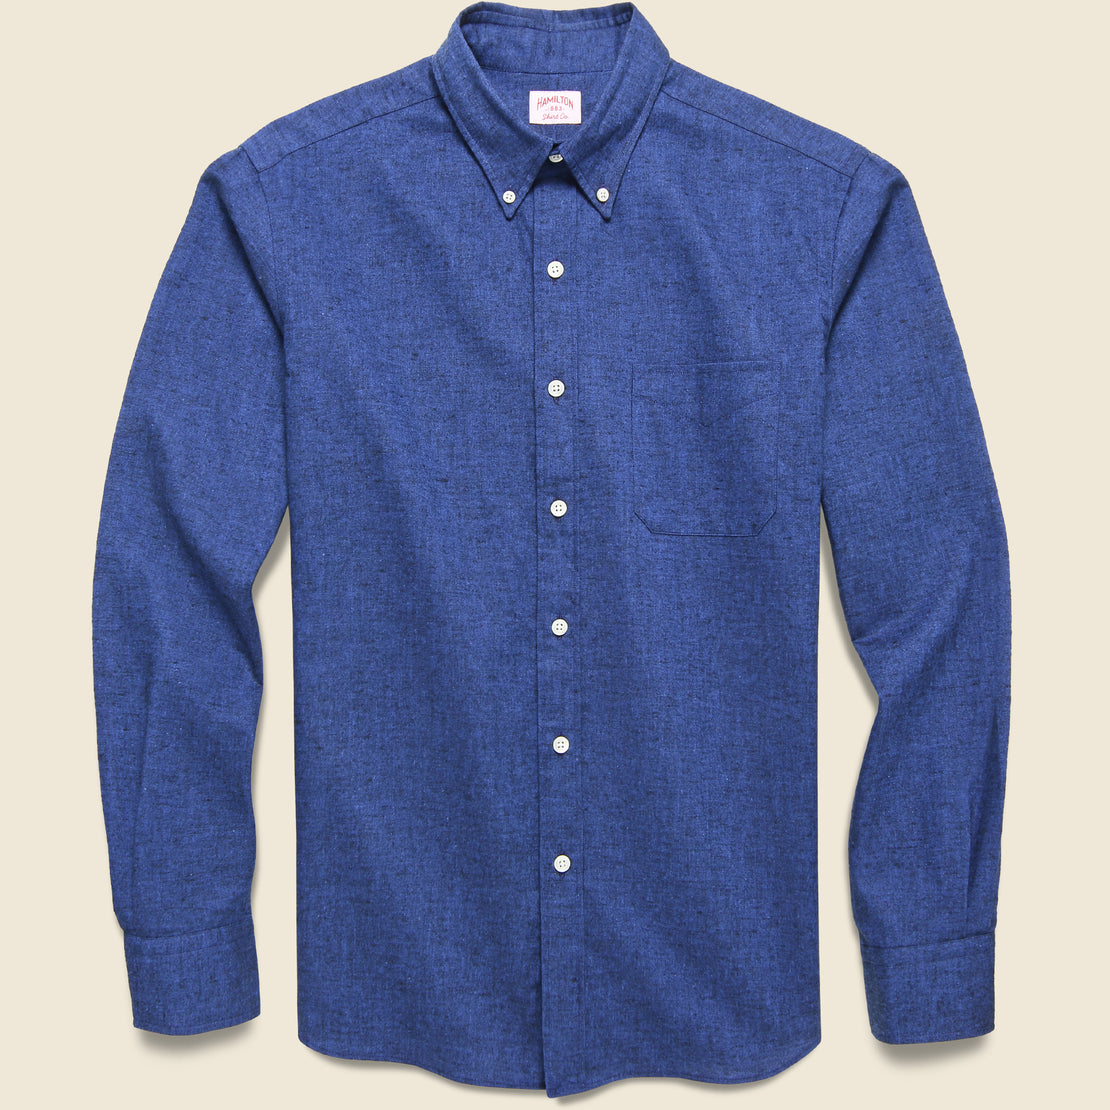 Hamilton Shirt Co. Brushed Twill Shirt - Dark Cobalt/Black